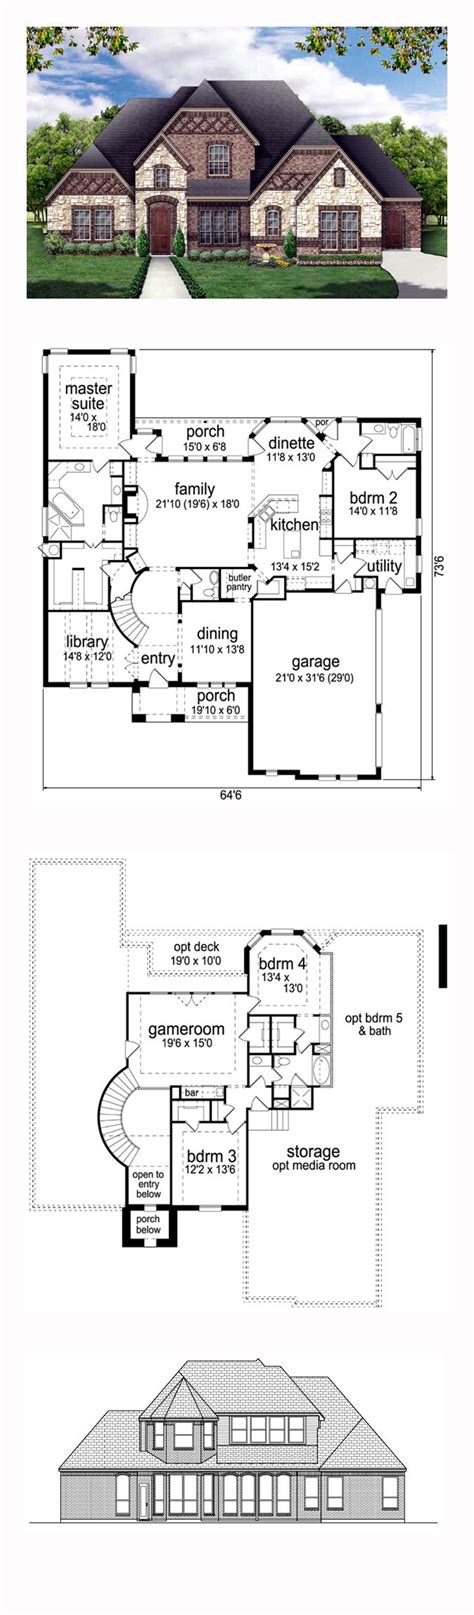 images   floor plans  pinterest bonus rooms monster house  master suite